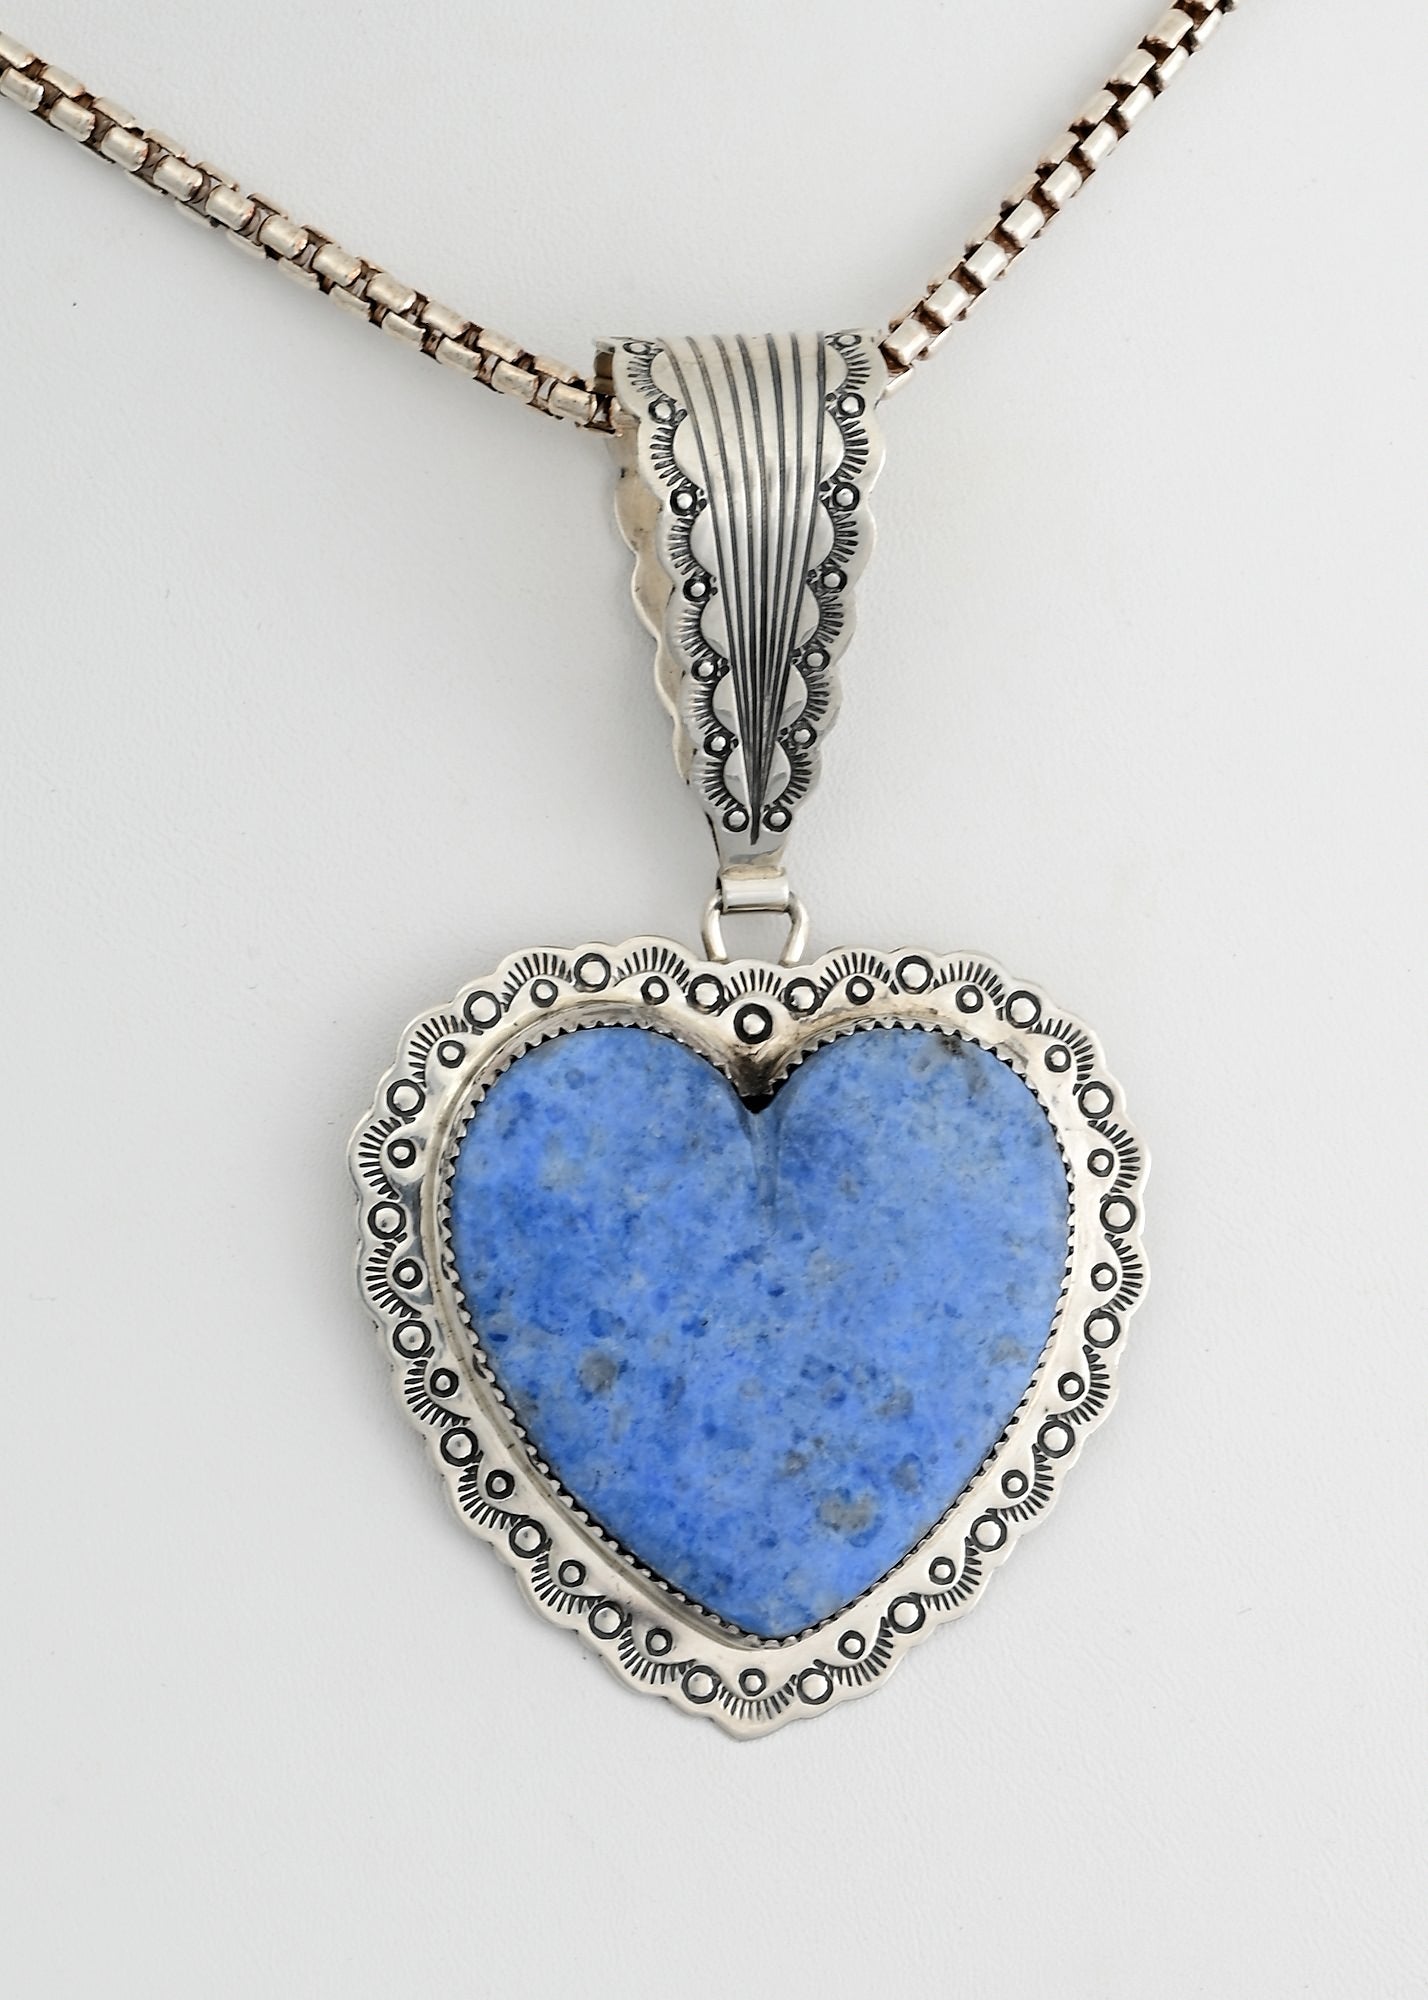 Heart Pendant with Sodalite; Vintage, by Roger Skeets Jr